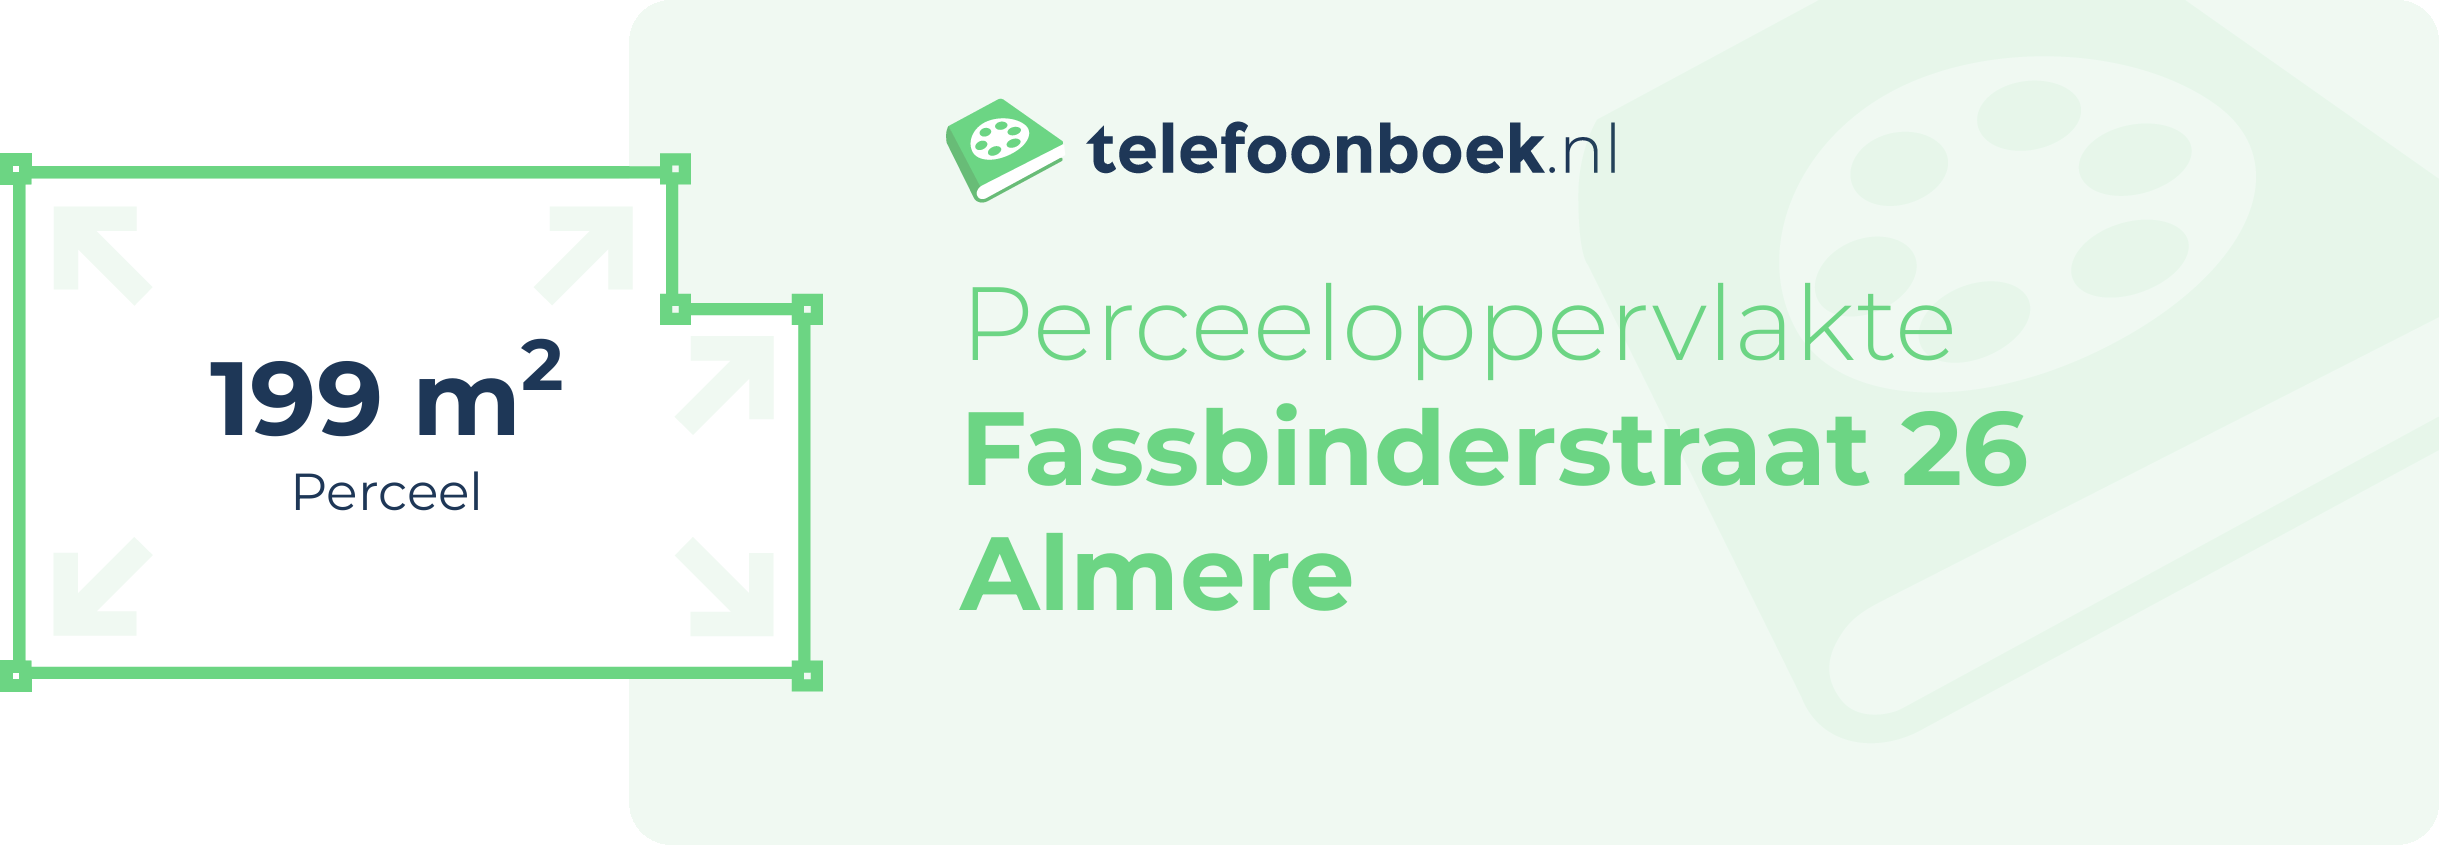 Perceeloppervlakte Fassbinderstraat 26 Almere